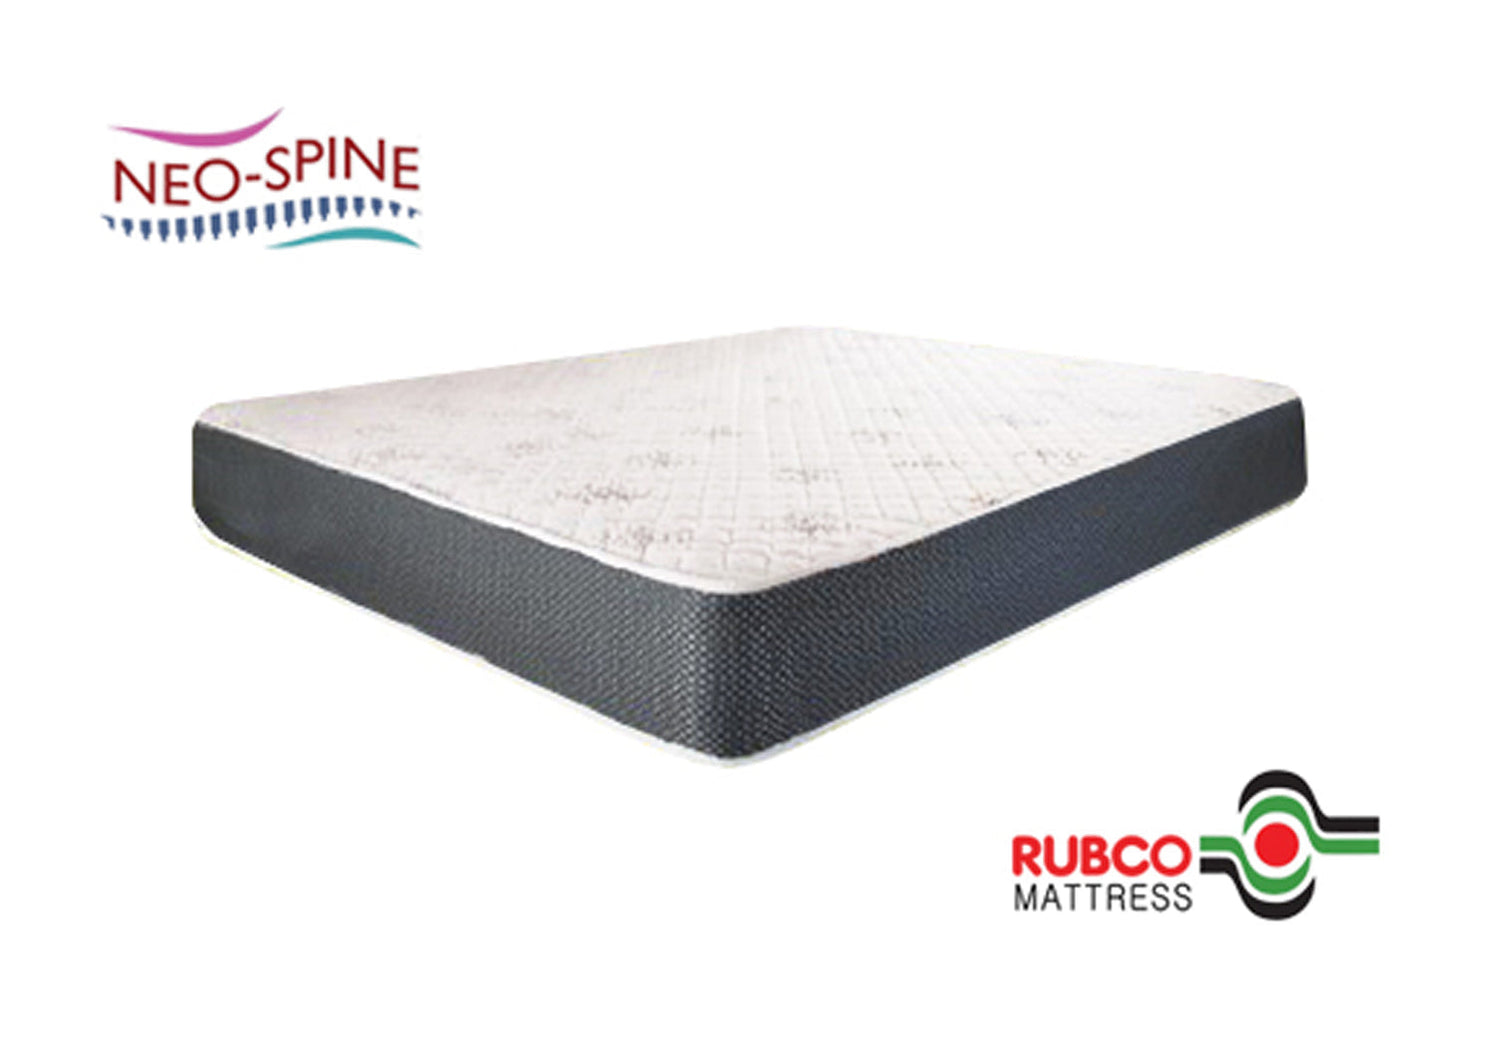 rubco mattress price trivandrum